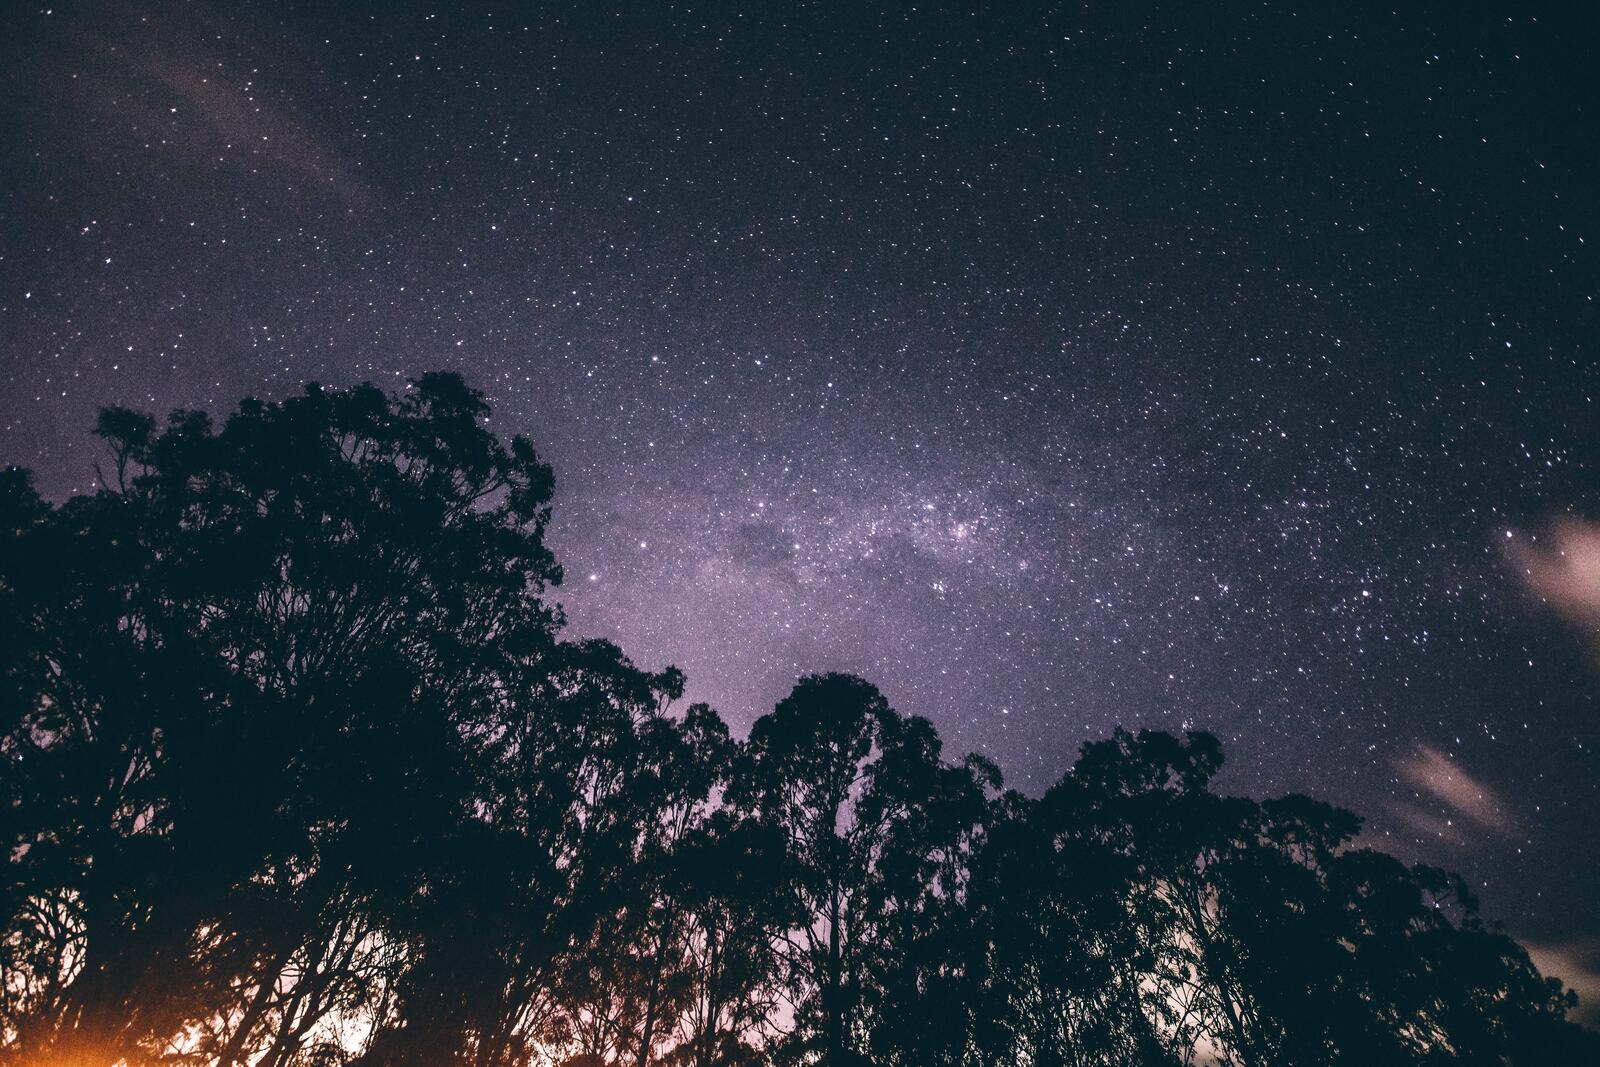 Бесплатное фото Ночное небо со звездами